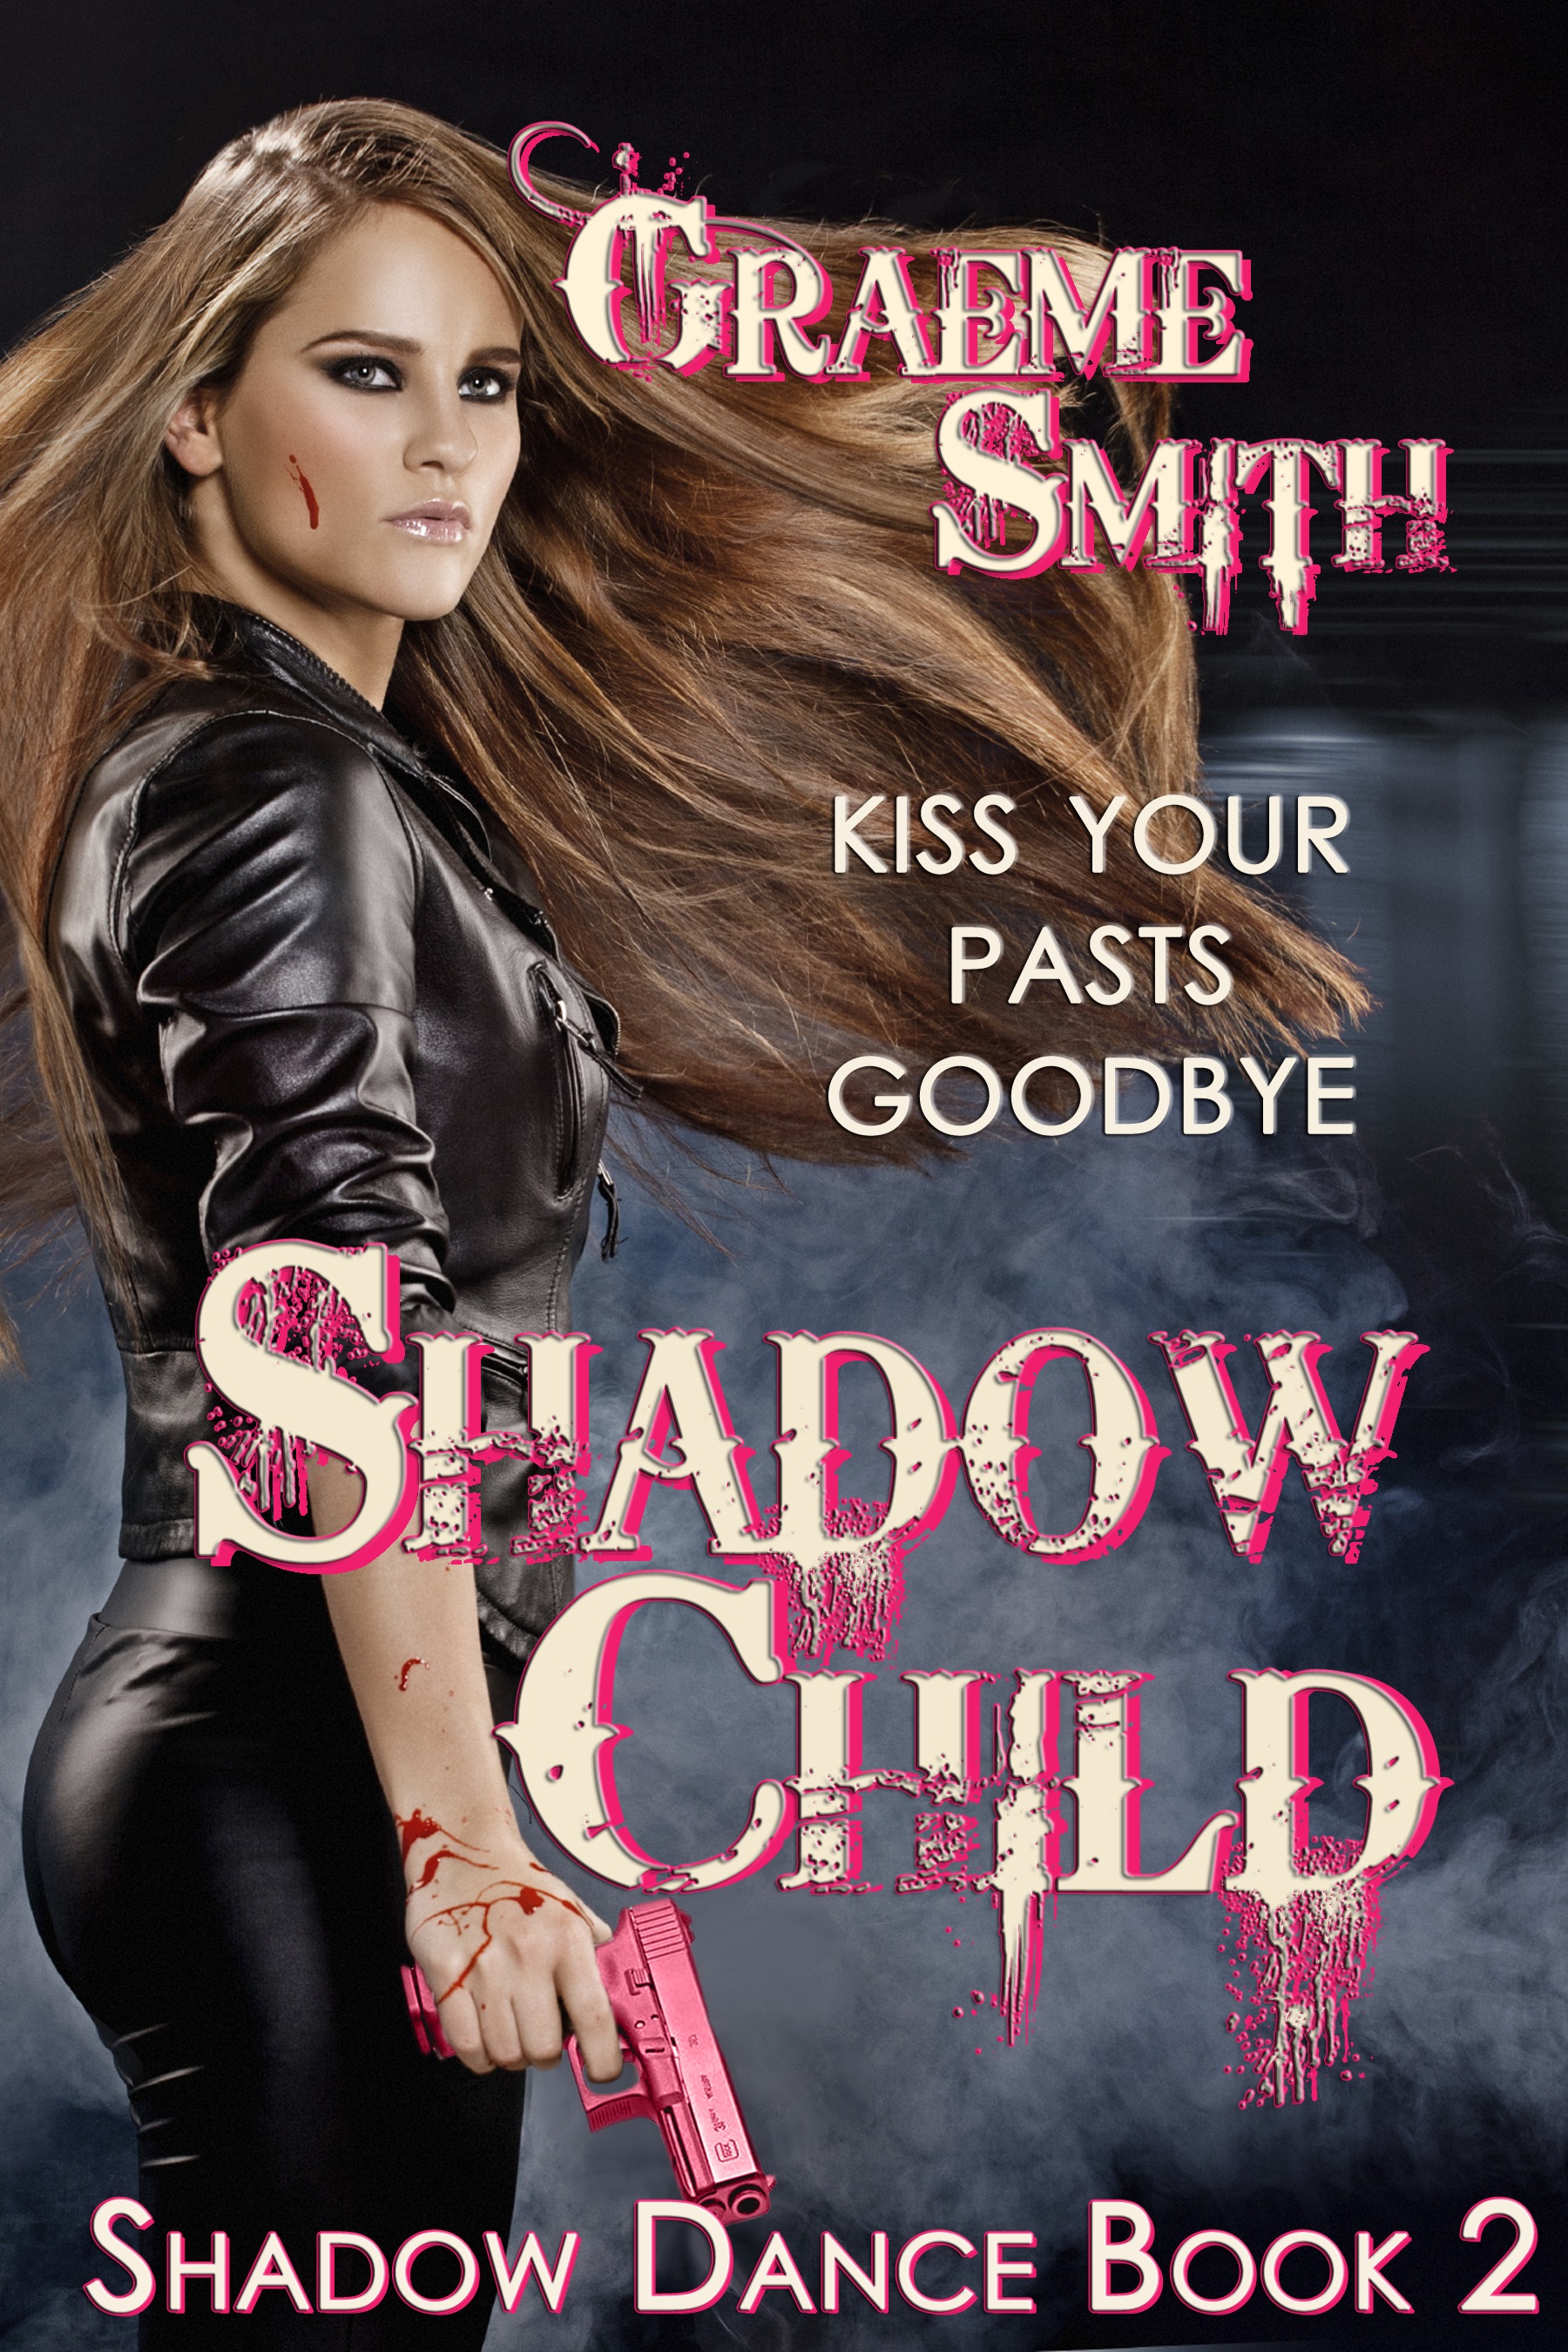 Shadow Child (Shadow Dance Book 2) - read excerpt